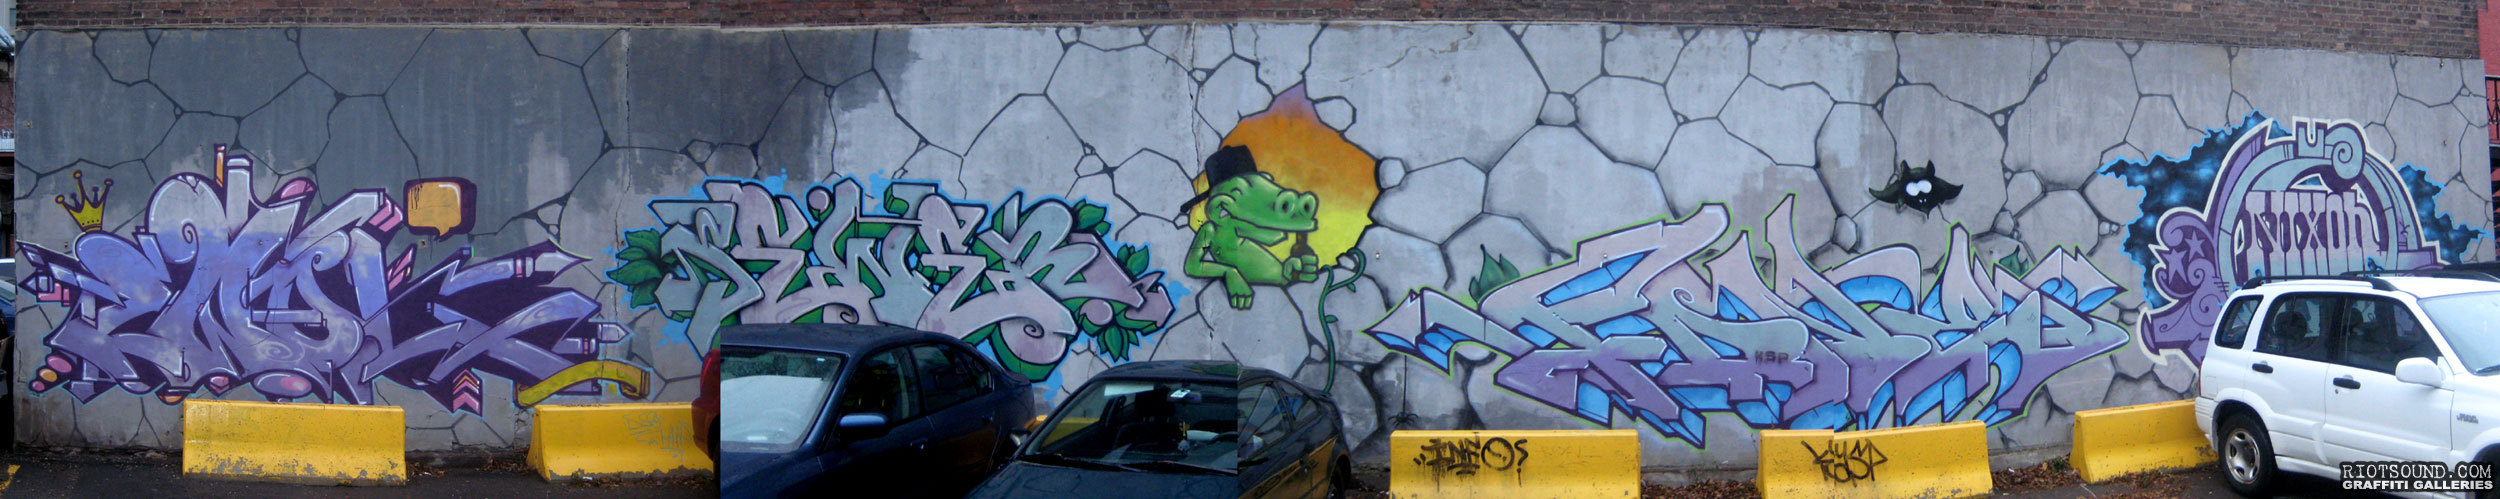 Montreal Graffiti Production 1